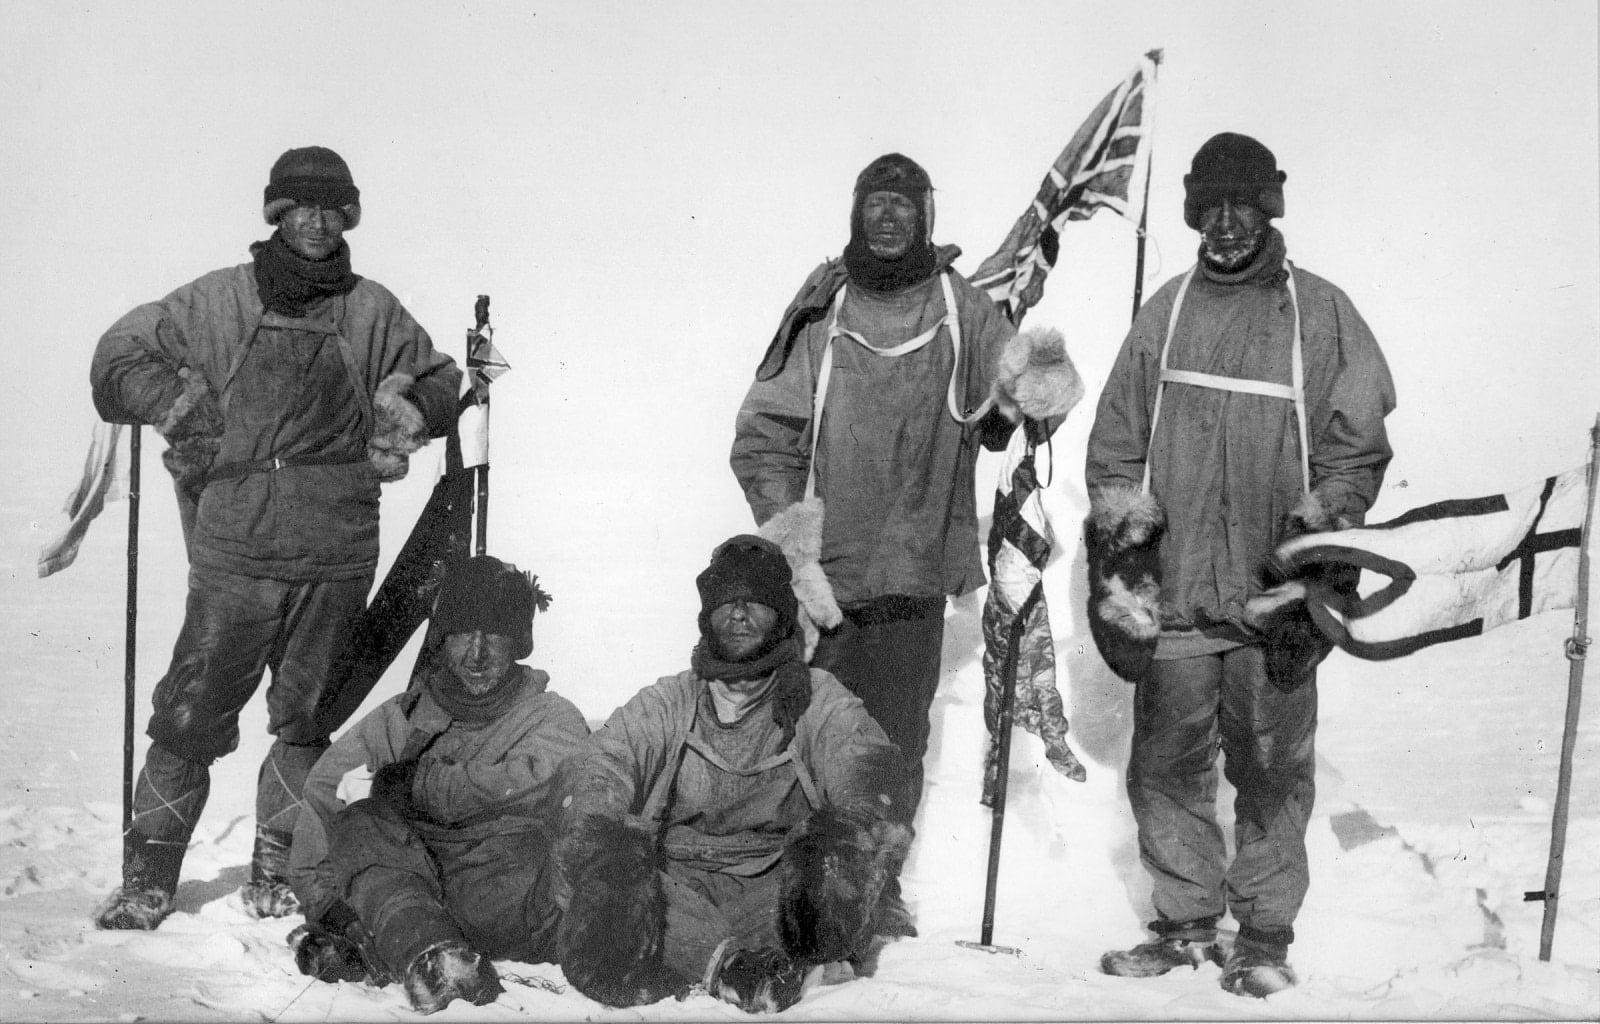 svalbard and jan mayen military uniforms a glimpse into arctic warfare attire 1